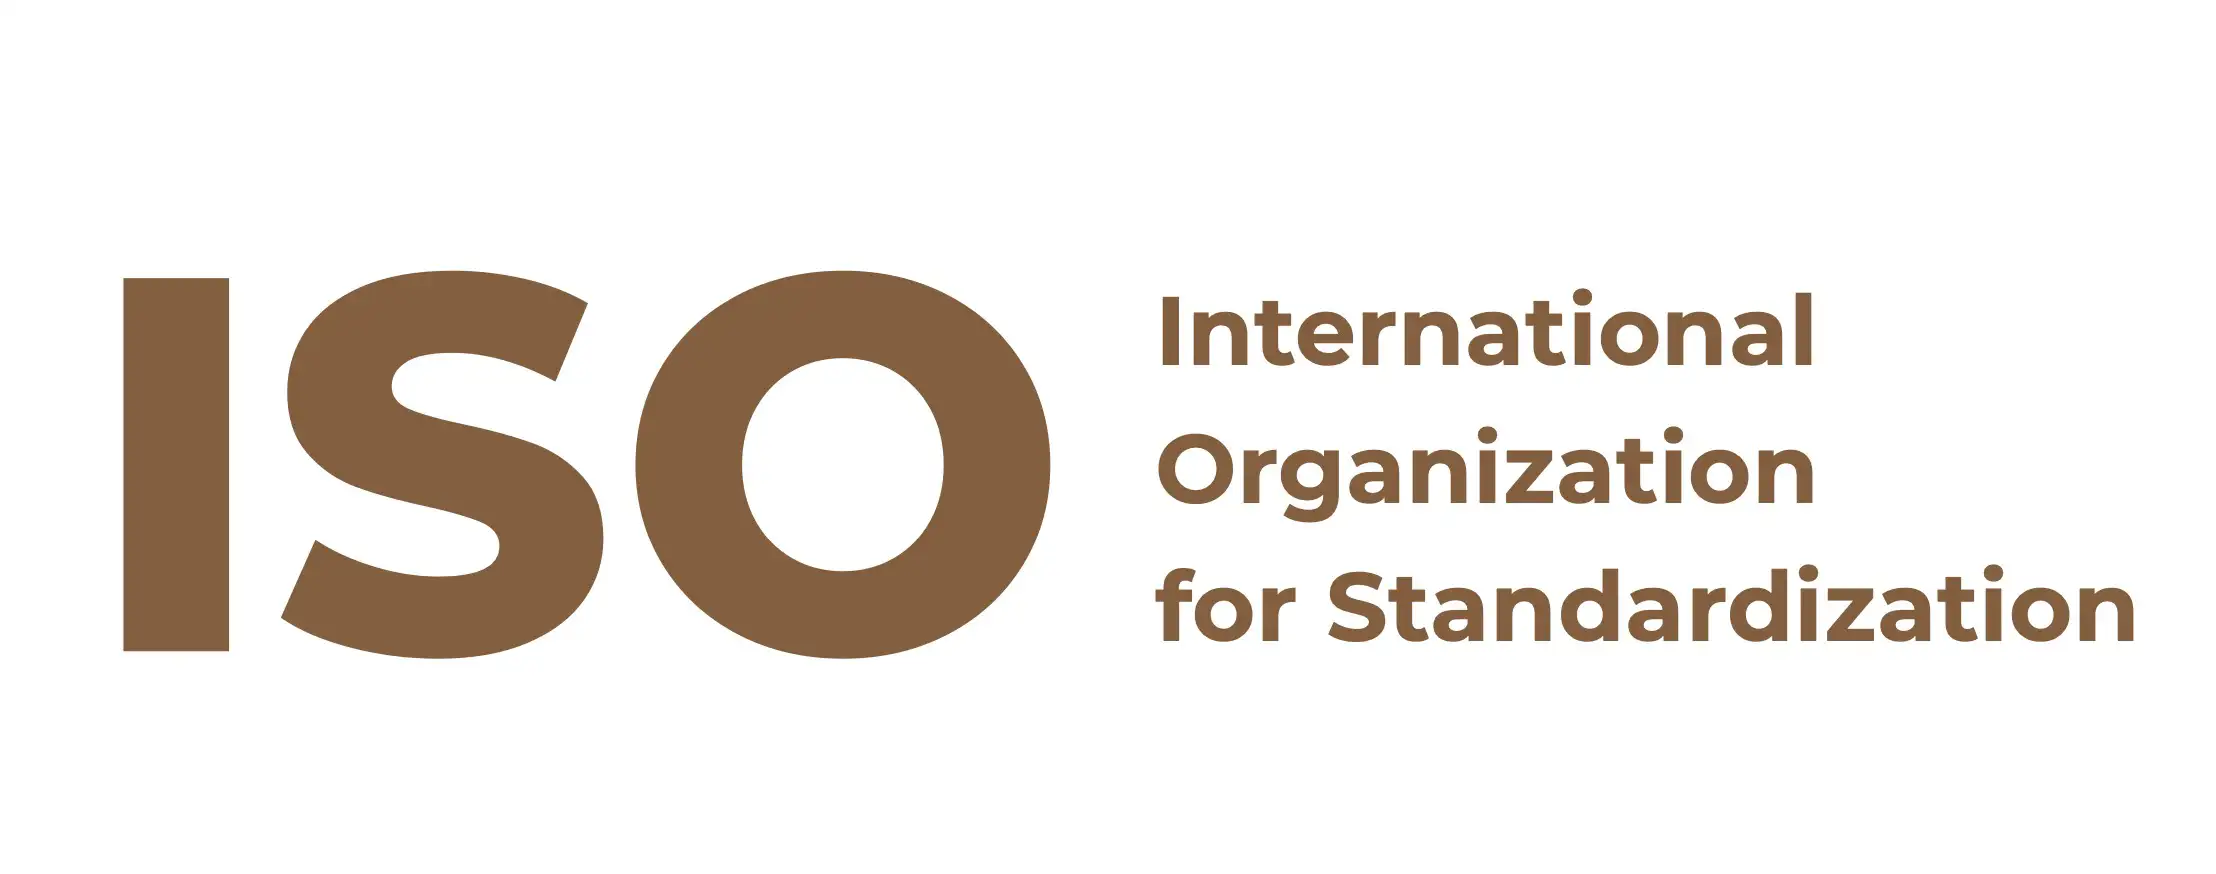 nternational Organization for Standardization